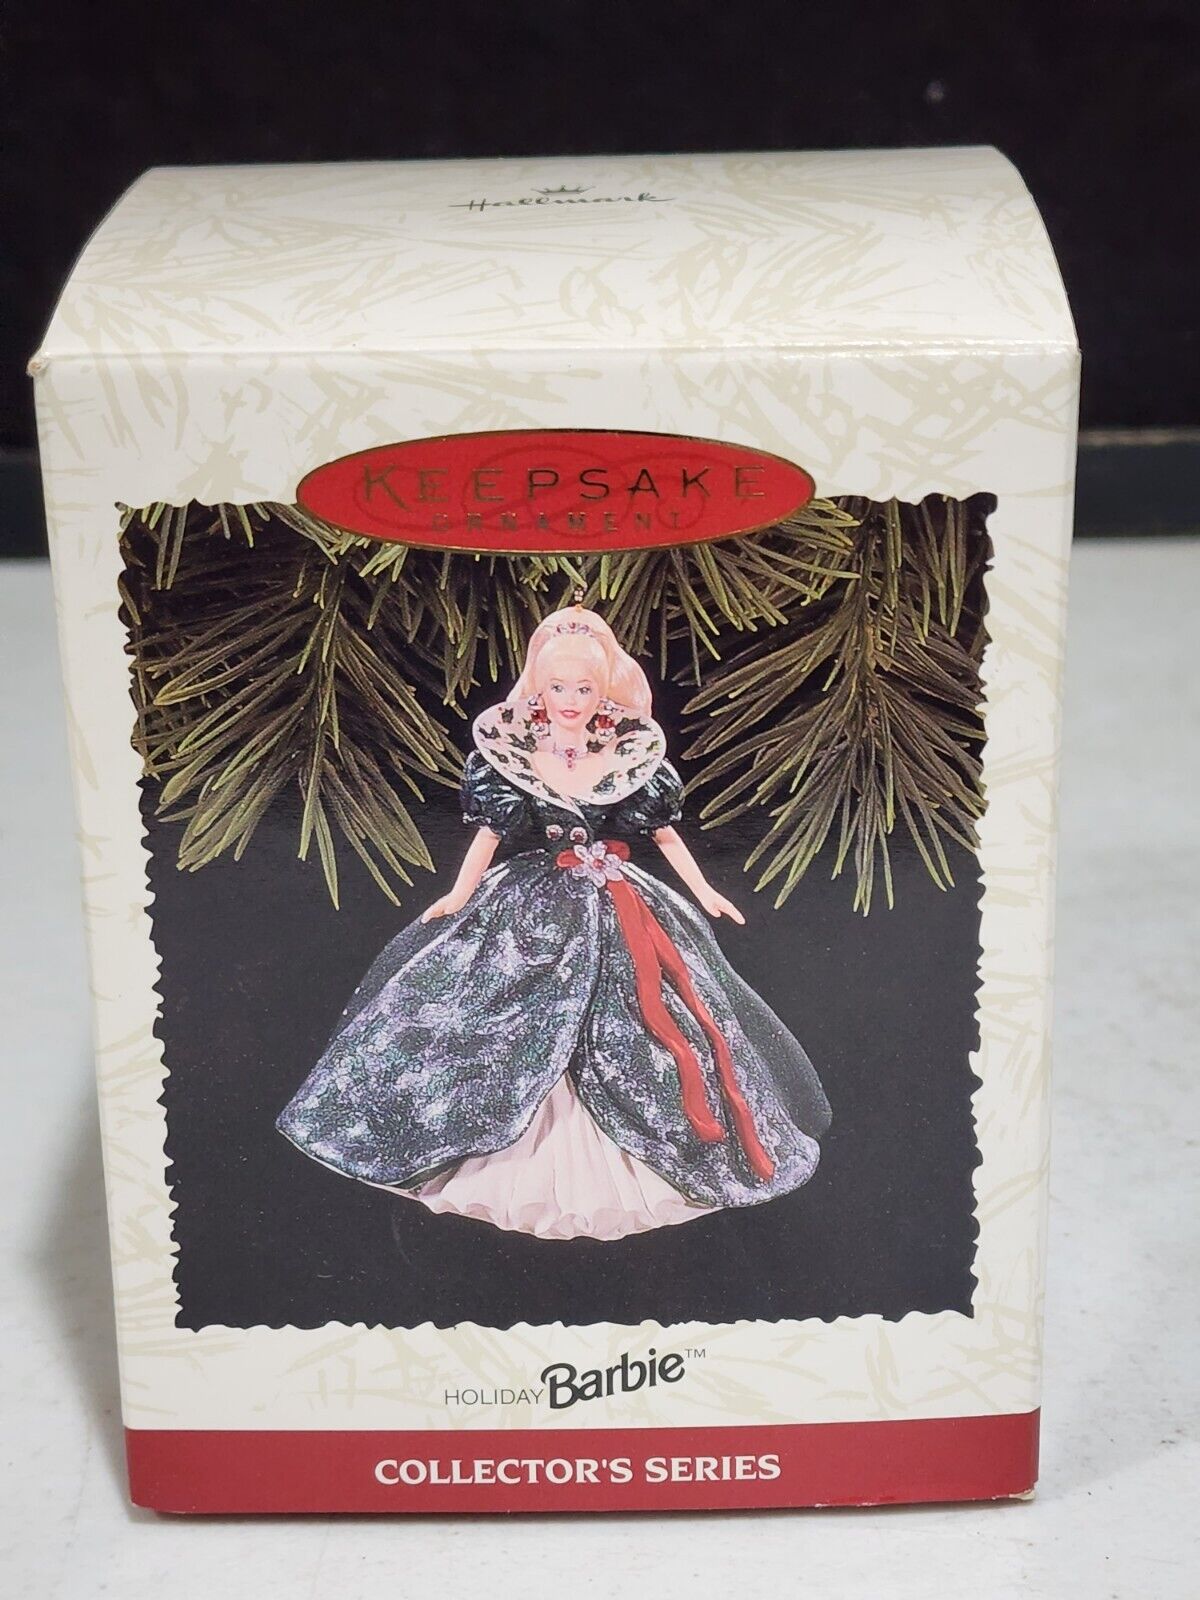 1995 Hallmark Keepsake Holiday Barbie Collectors Series Ornament IN BOX